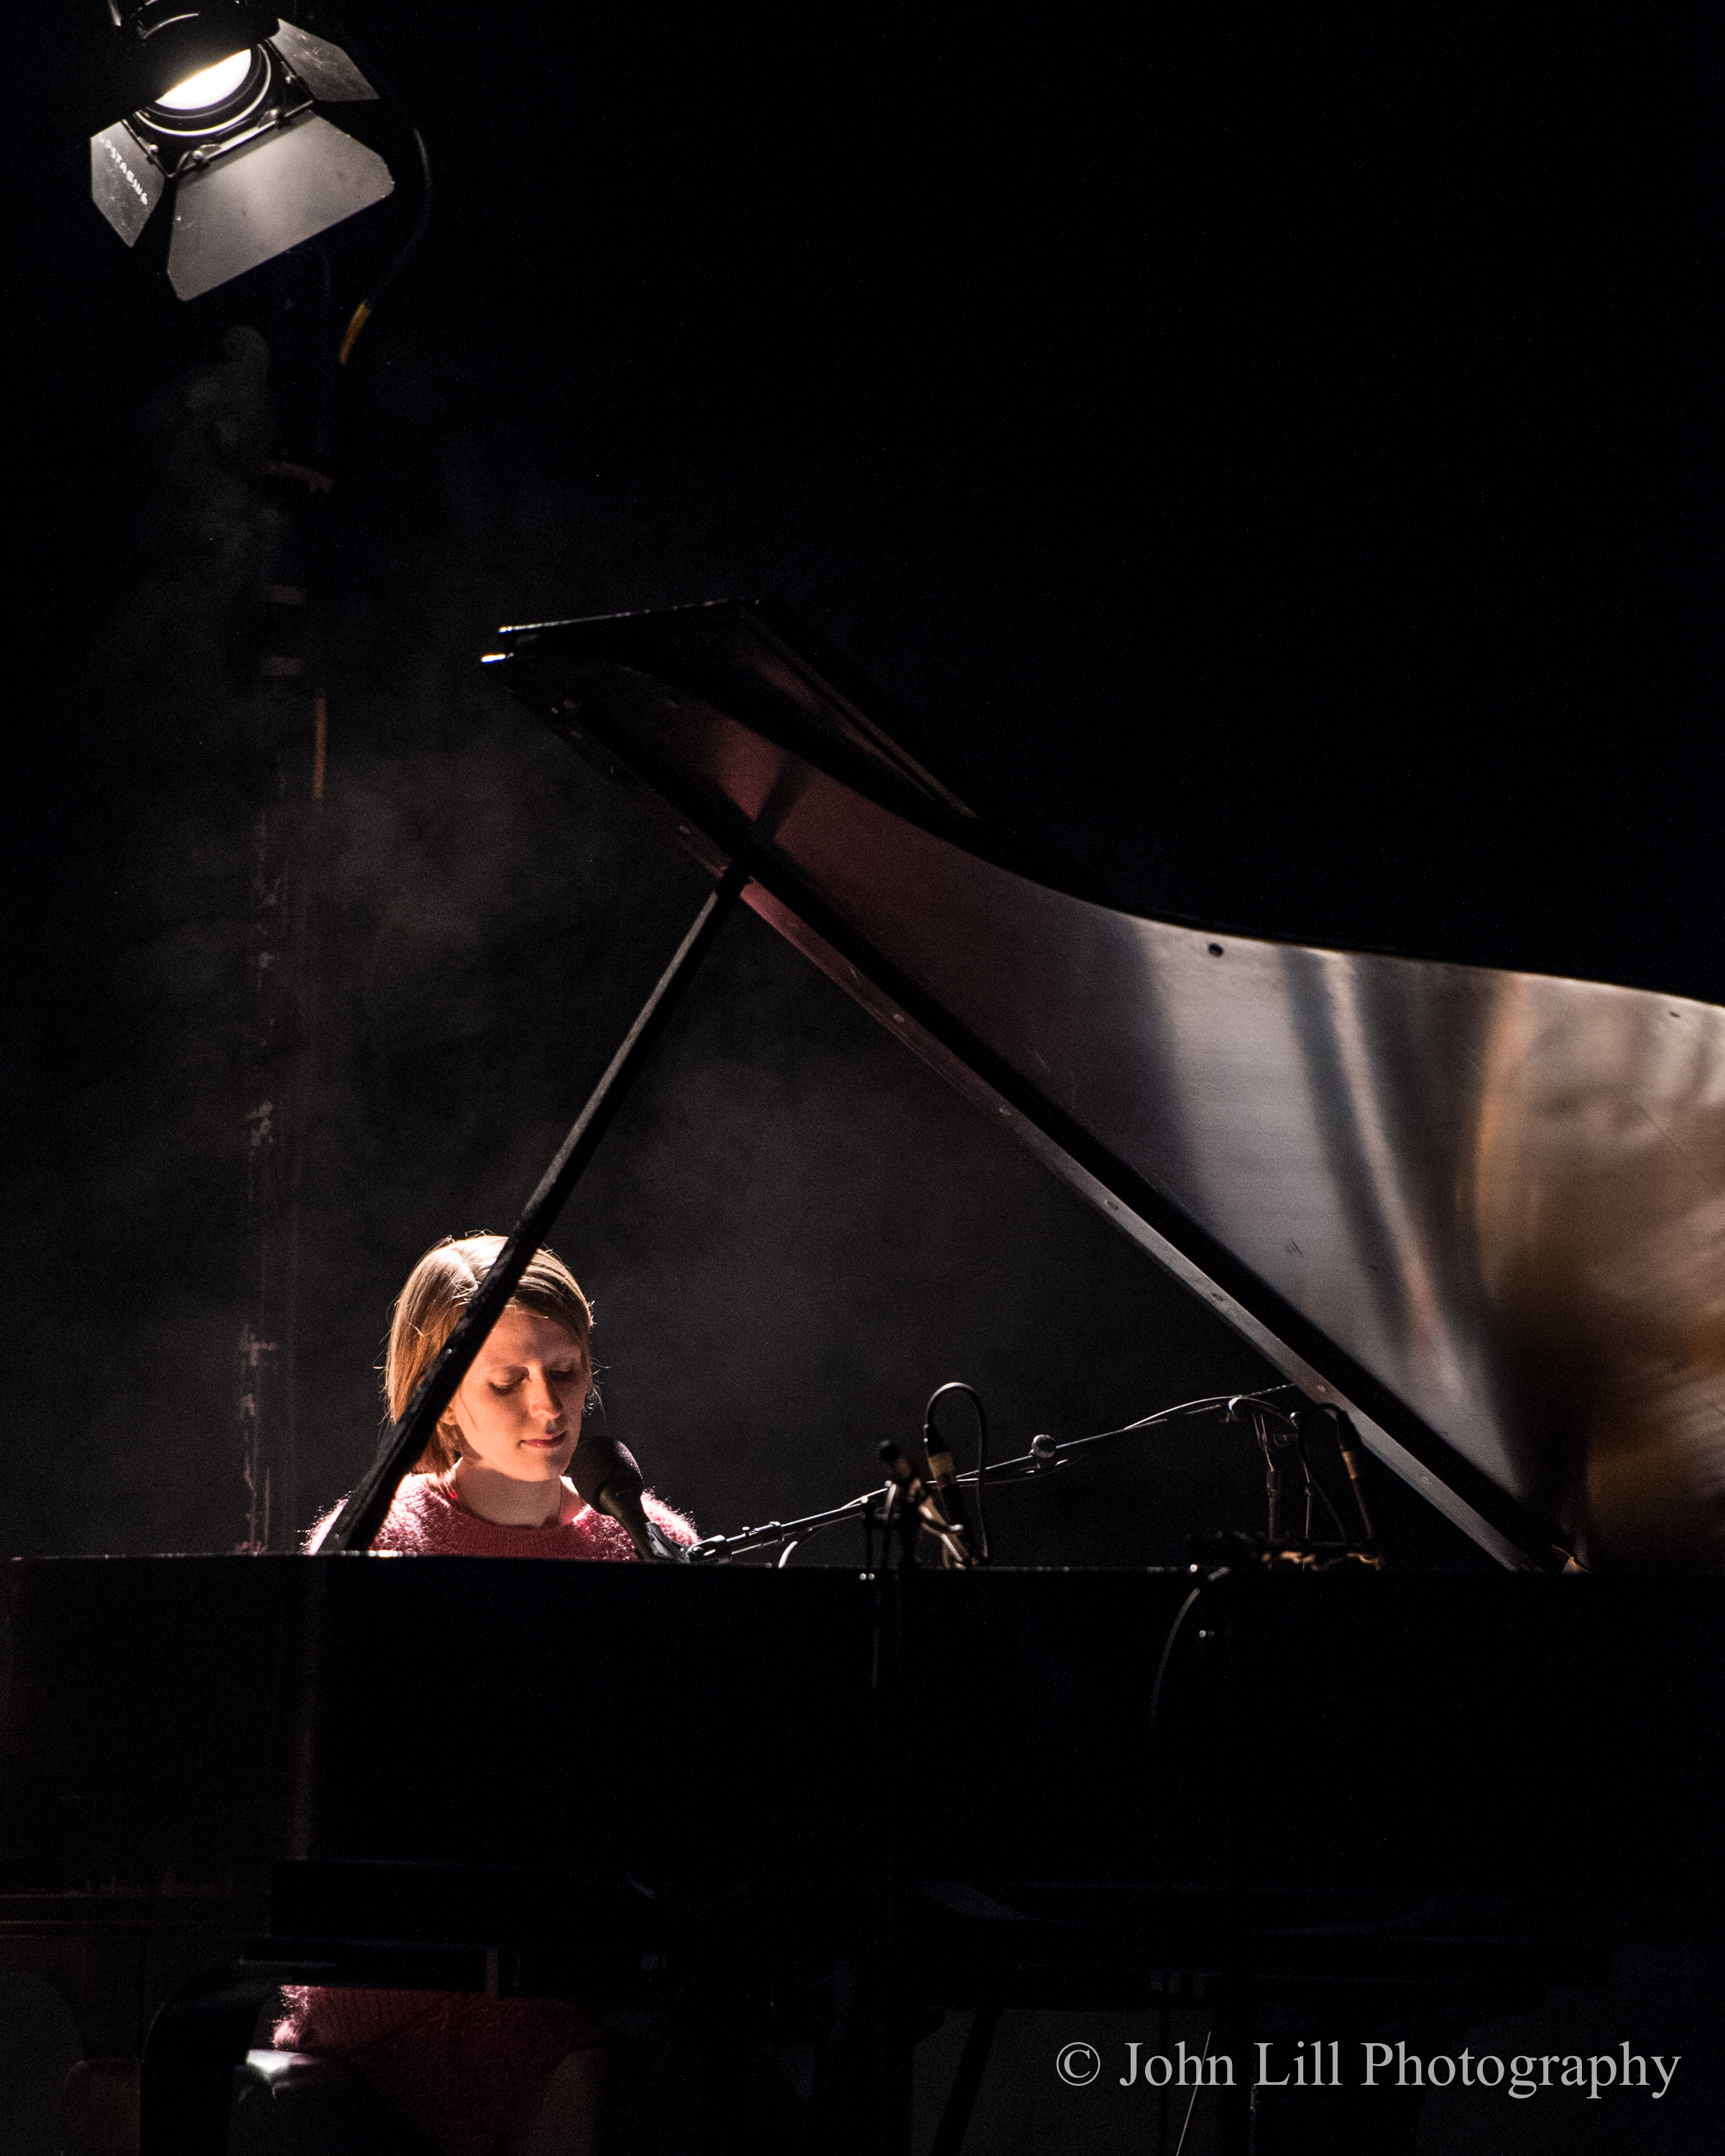 Marketa Irglova performs at McCaw Hall. (Photo by John Lill)